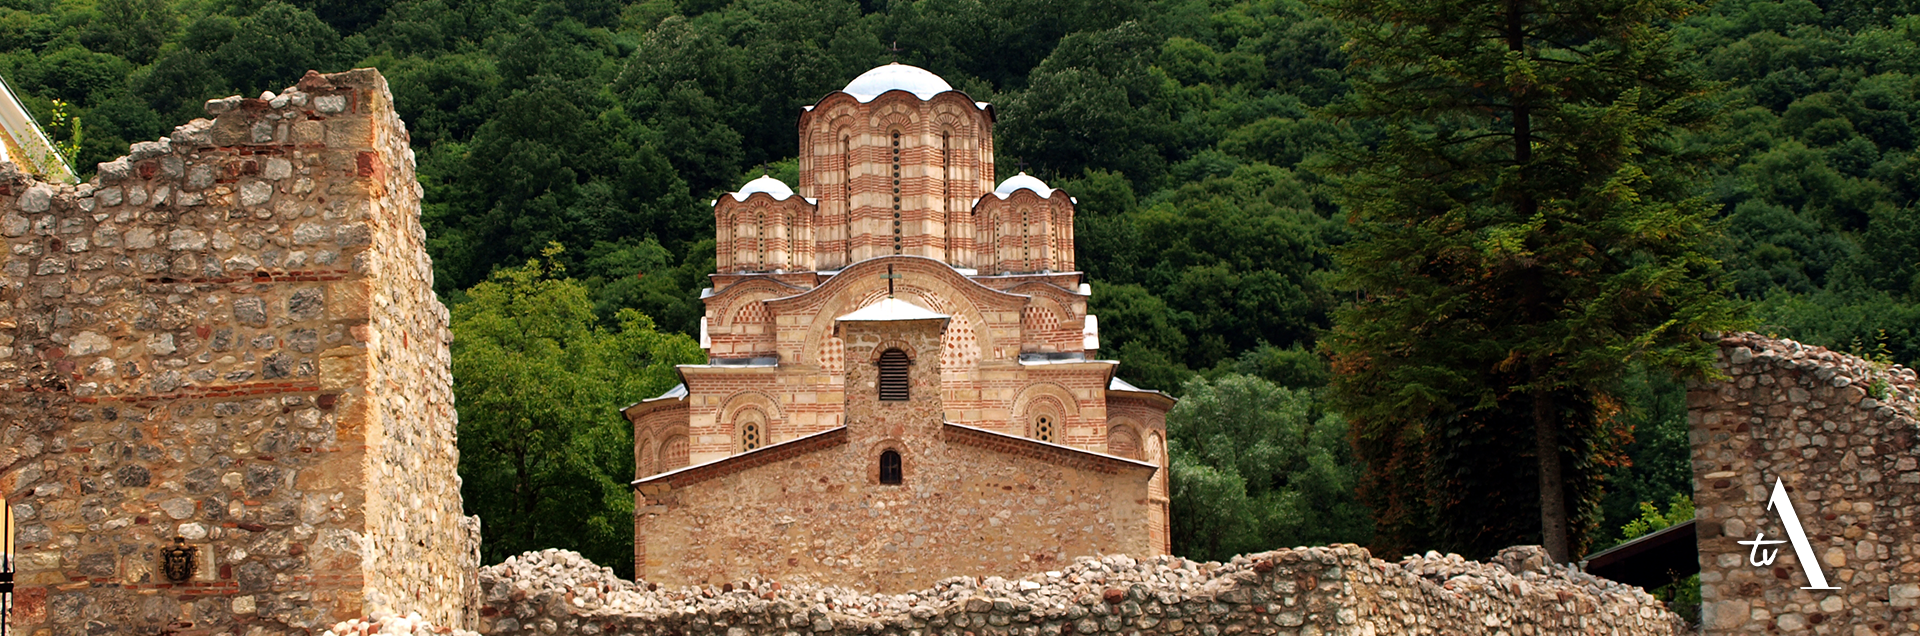 manastir_ravanica_portal.png